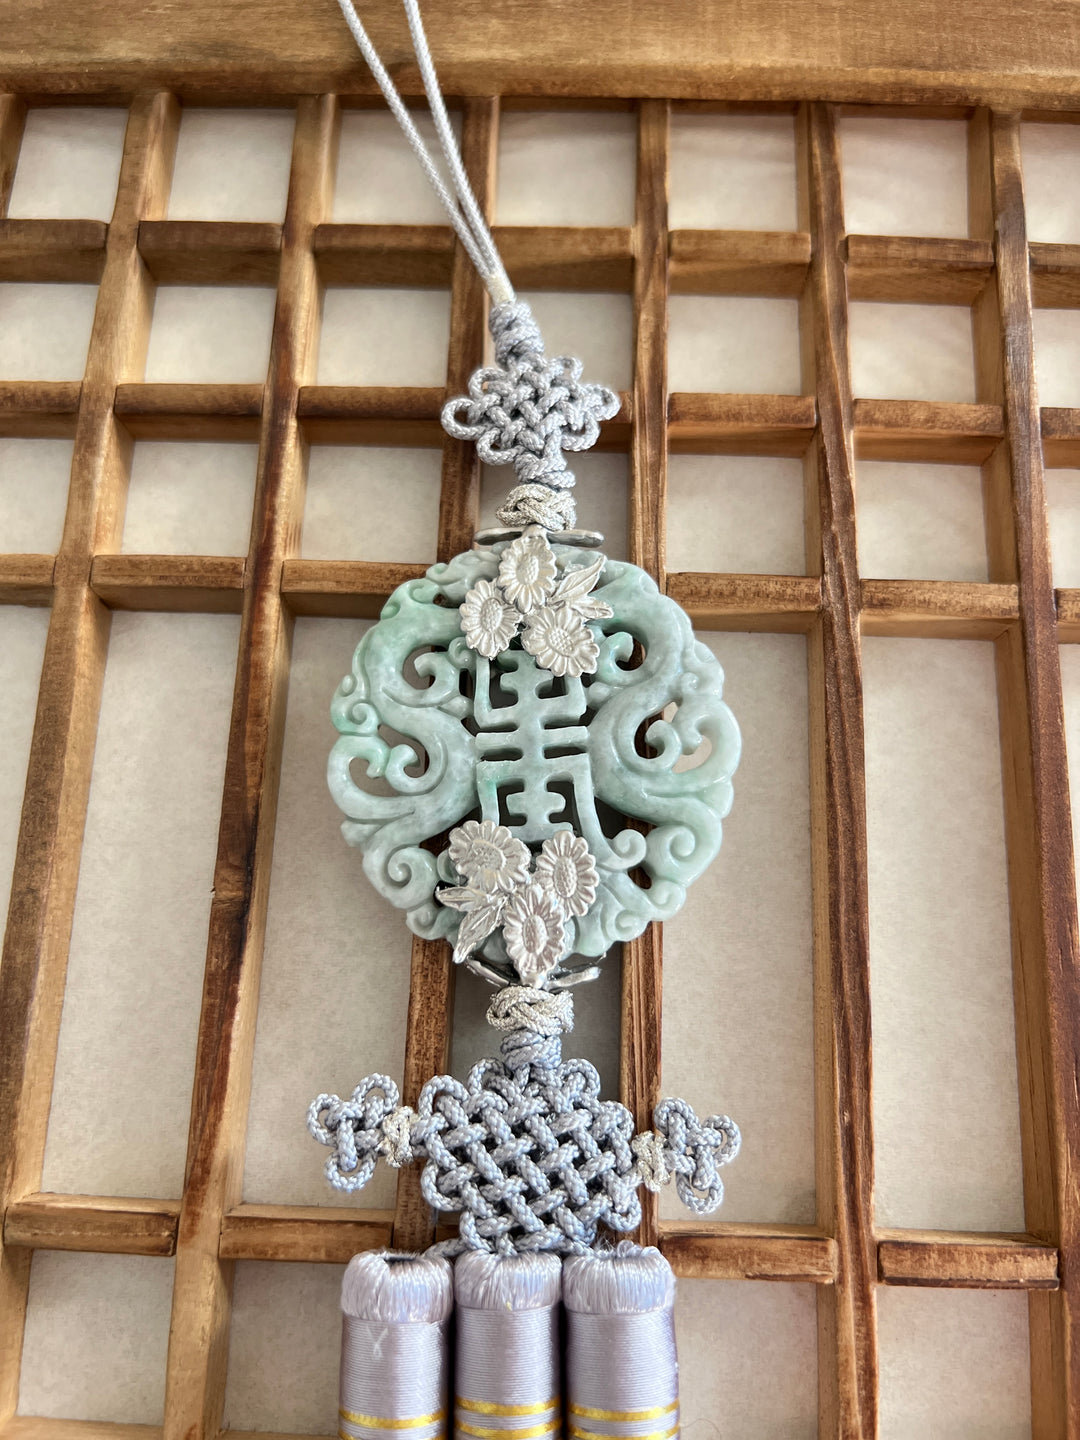 Jade-Tessel-Zubehör und Ornament für Glück, inklusive Rahmenoption (손수 옥 노리개)